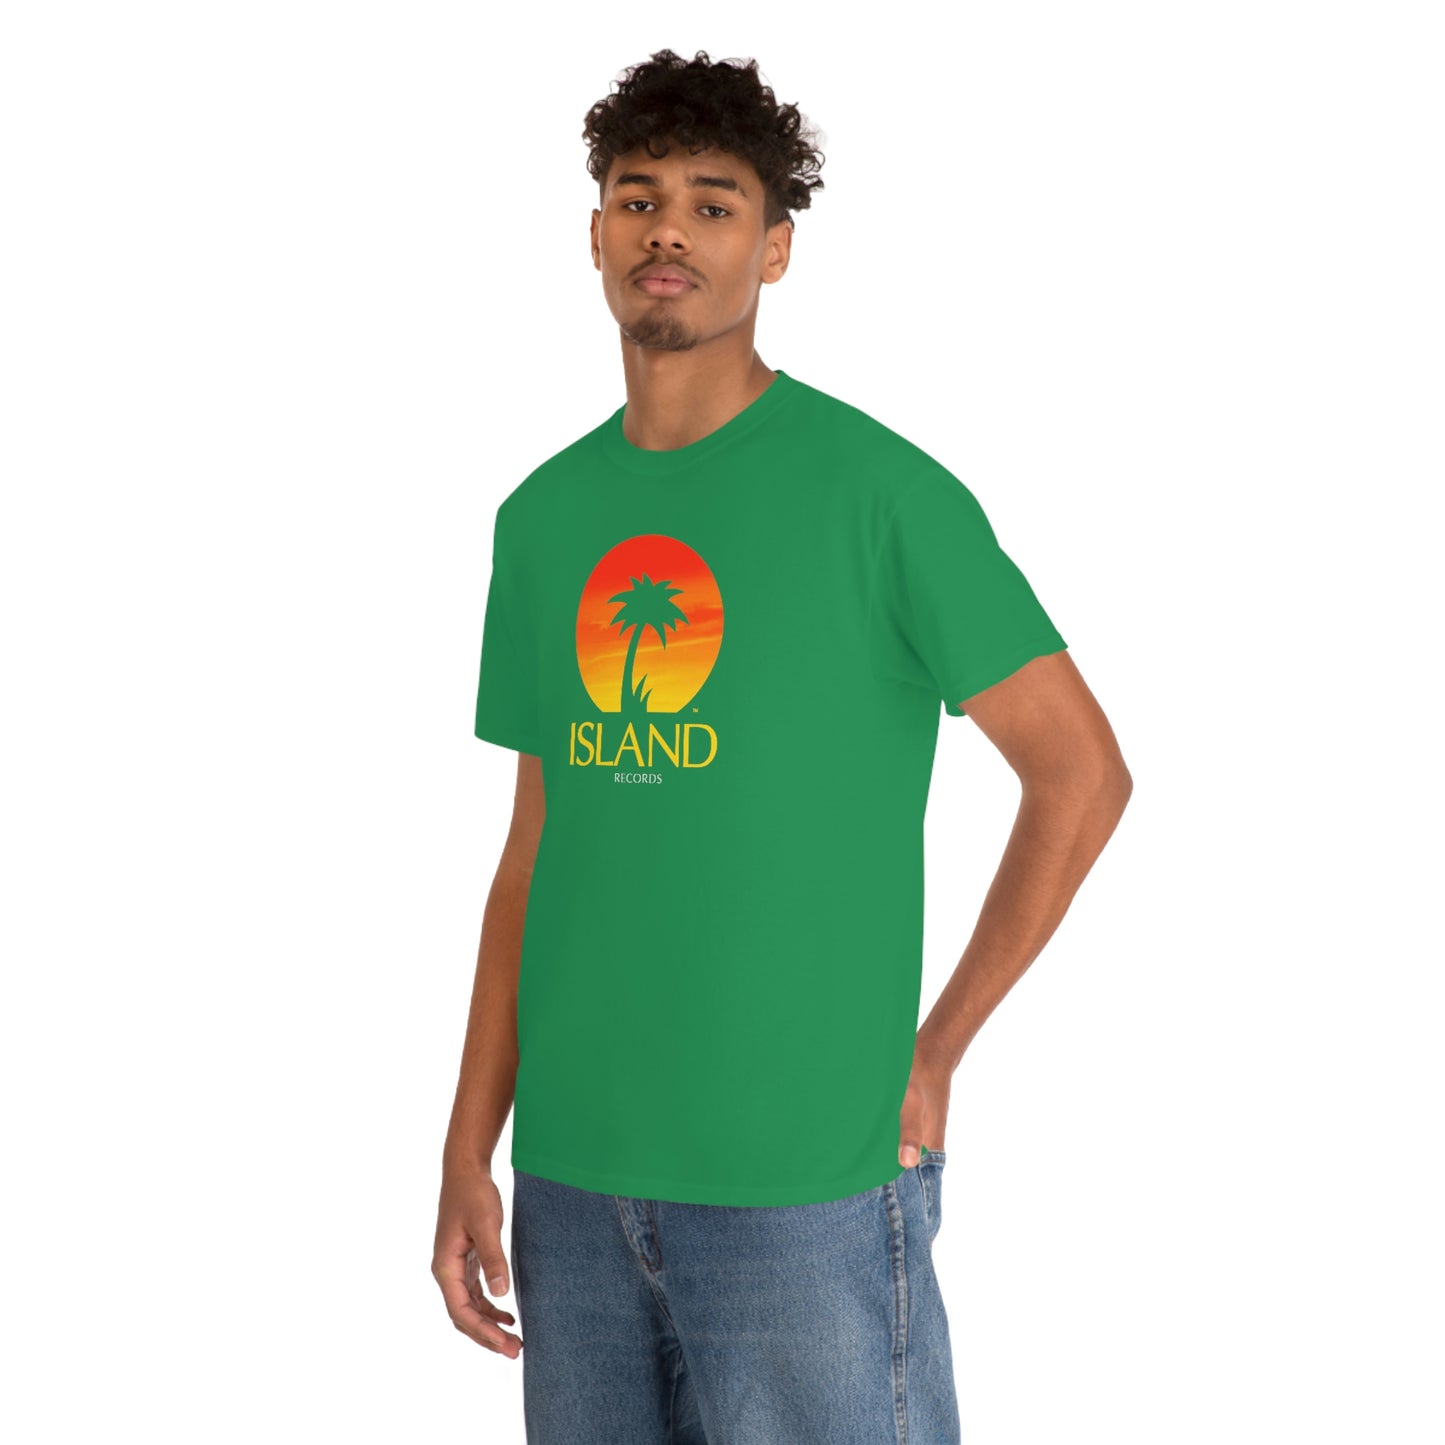 Island Records T-shirt